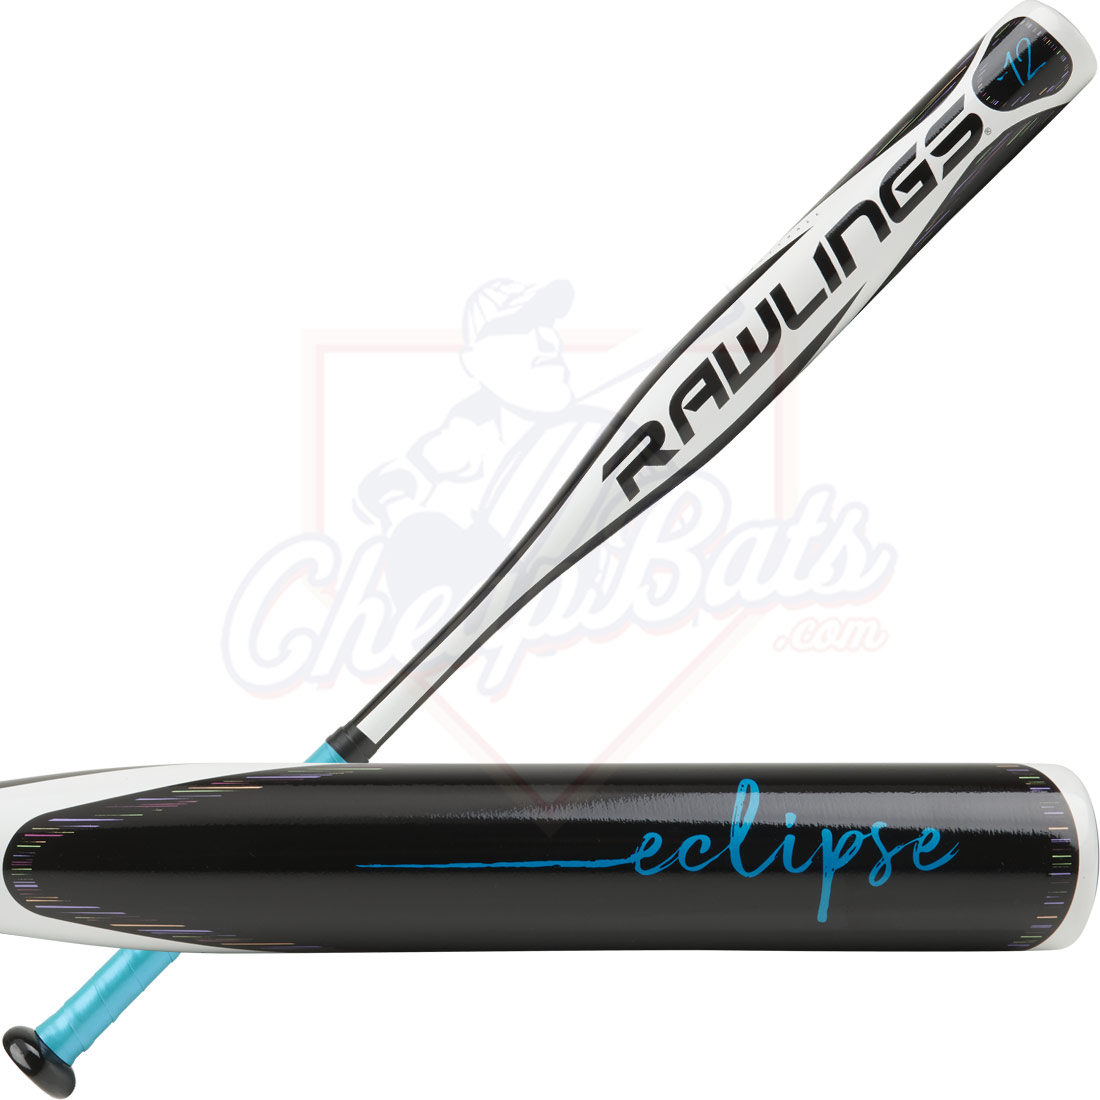 2020 Rawlings Eclipse Fastpitch Softball Bat -12oz FPZE12